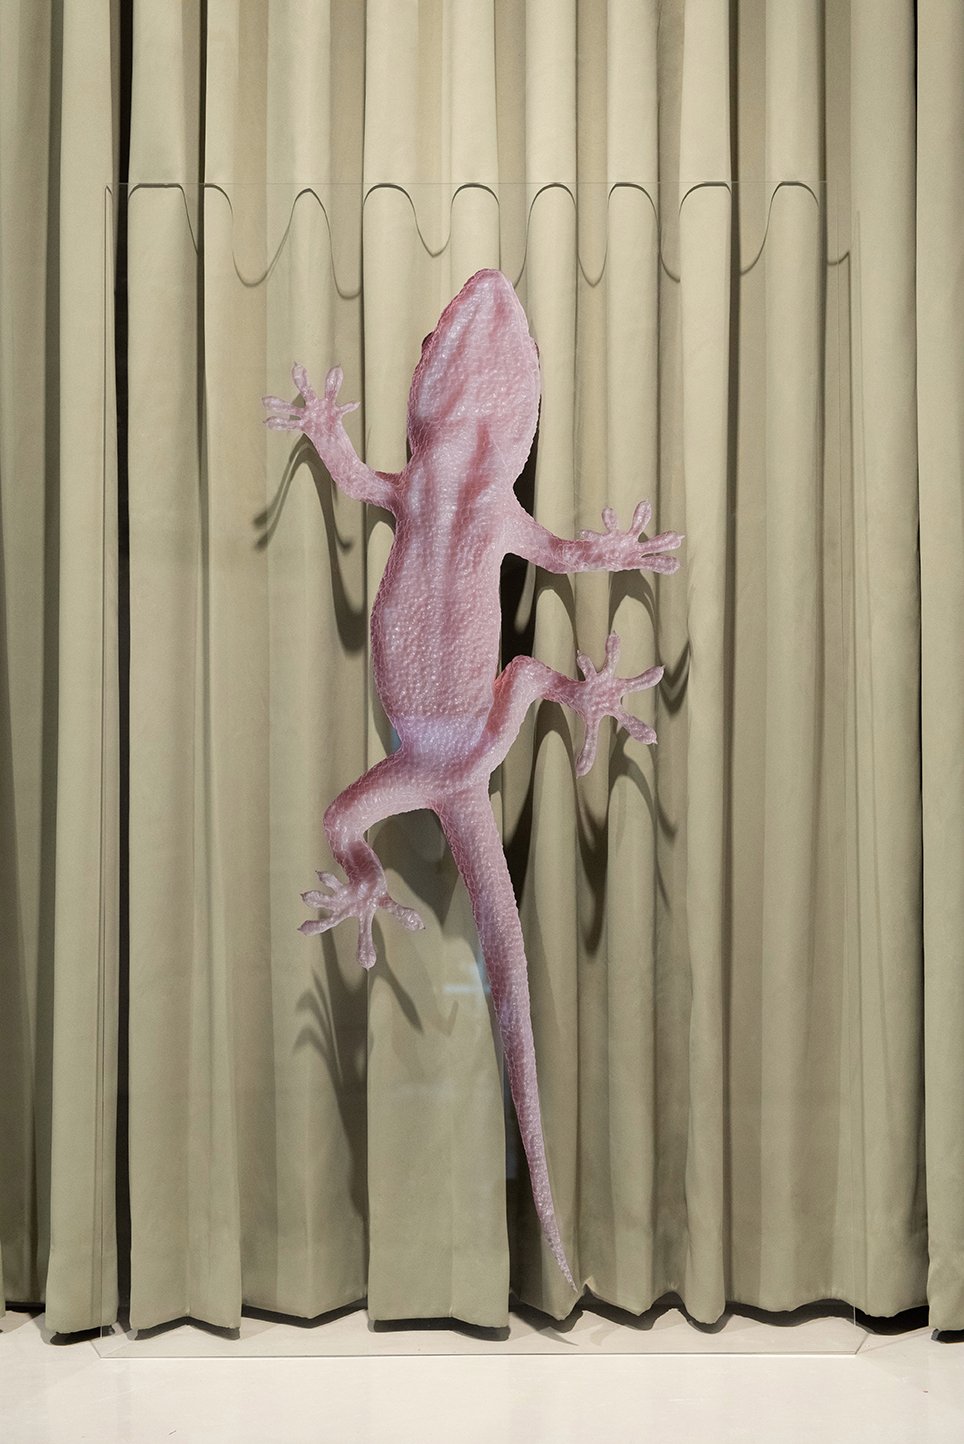   Untitled   2021, digital sculpture, UV printed on plexiglass, 150 × 95 × 8 cm 